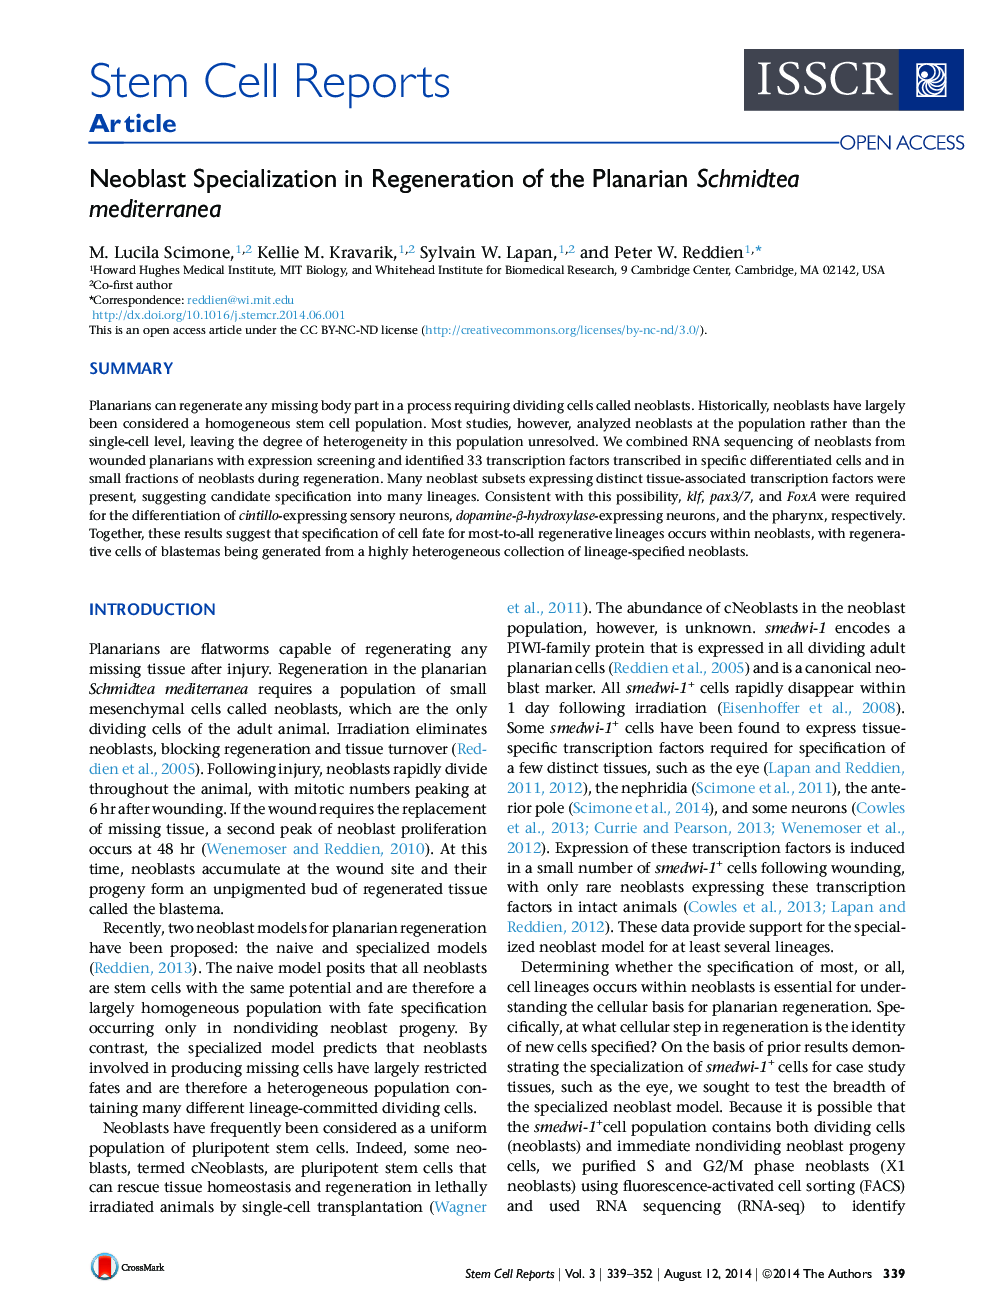 Neoblast Specialization in Regeneration of the Planarian Schmidtea mediterranea 